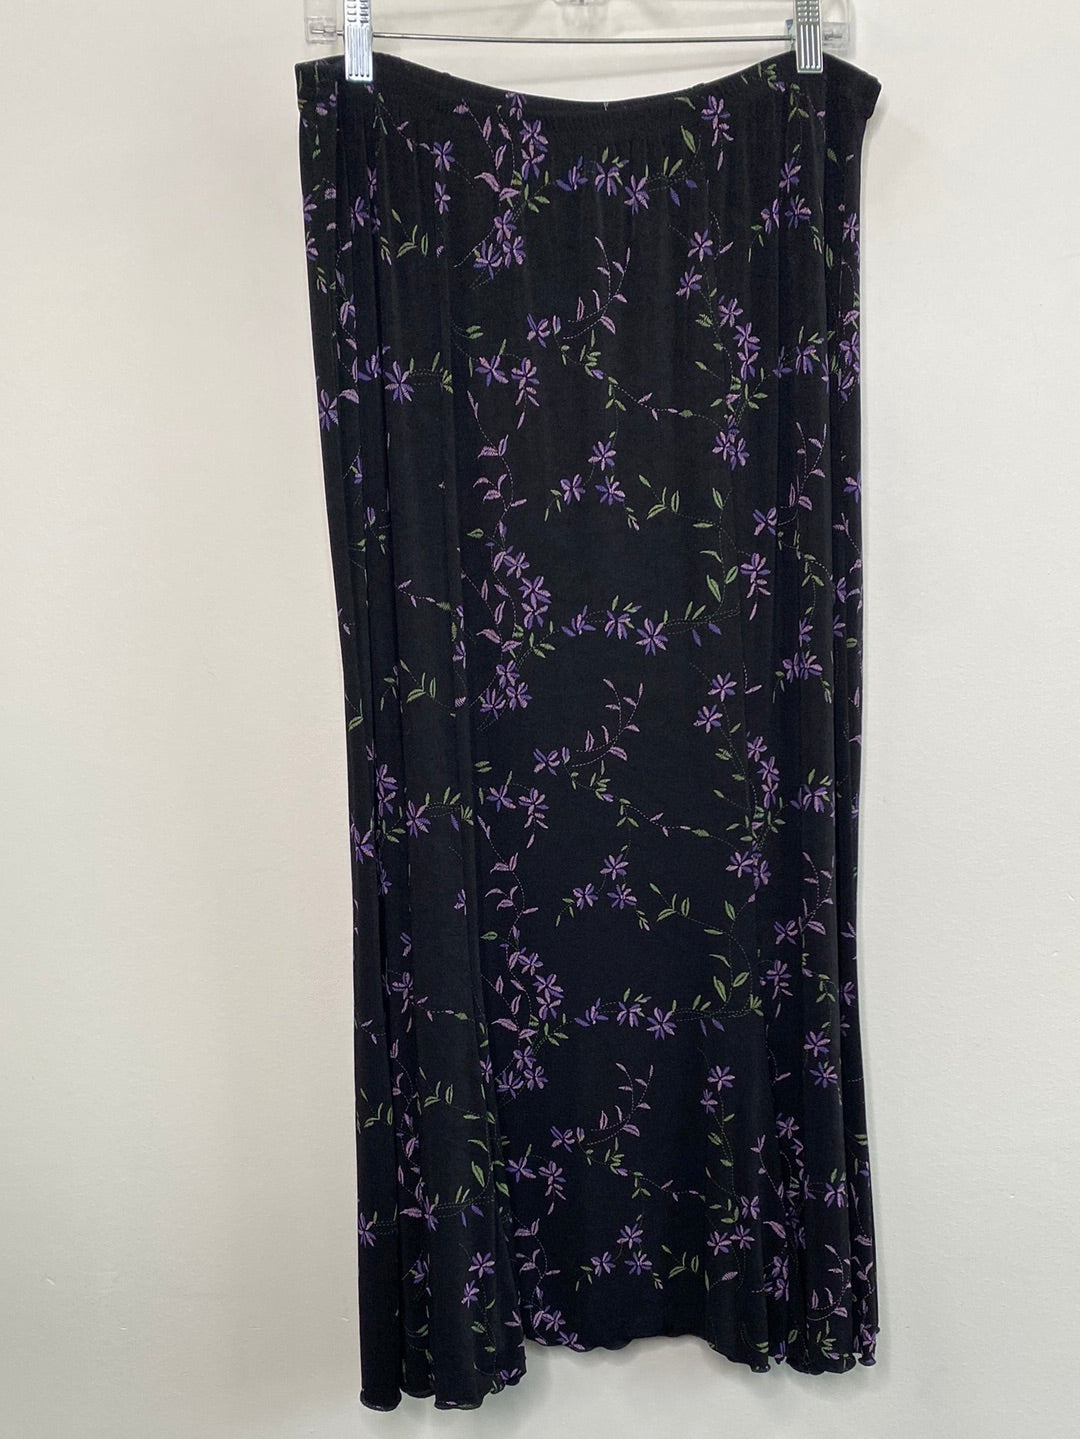 Briggs New York Floral Midi Skirt (XL)